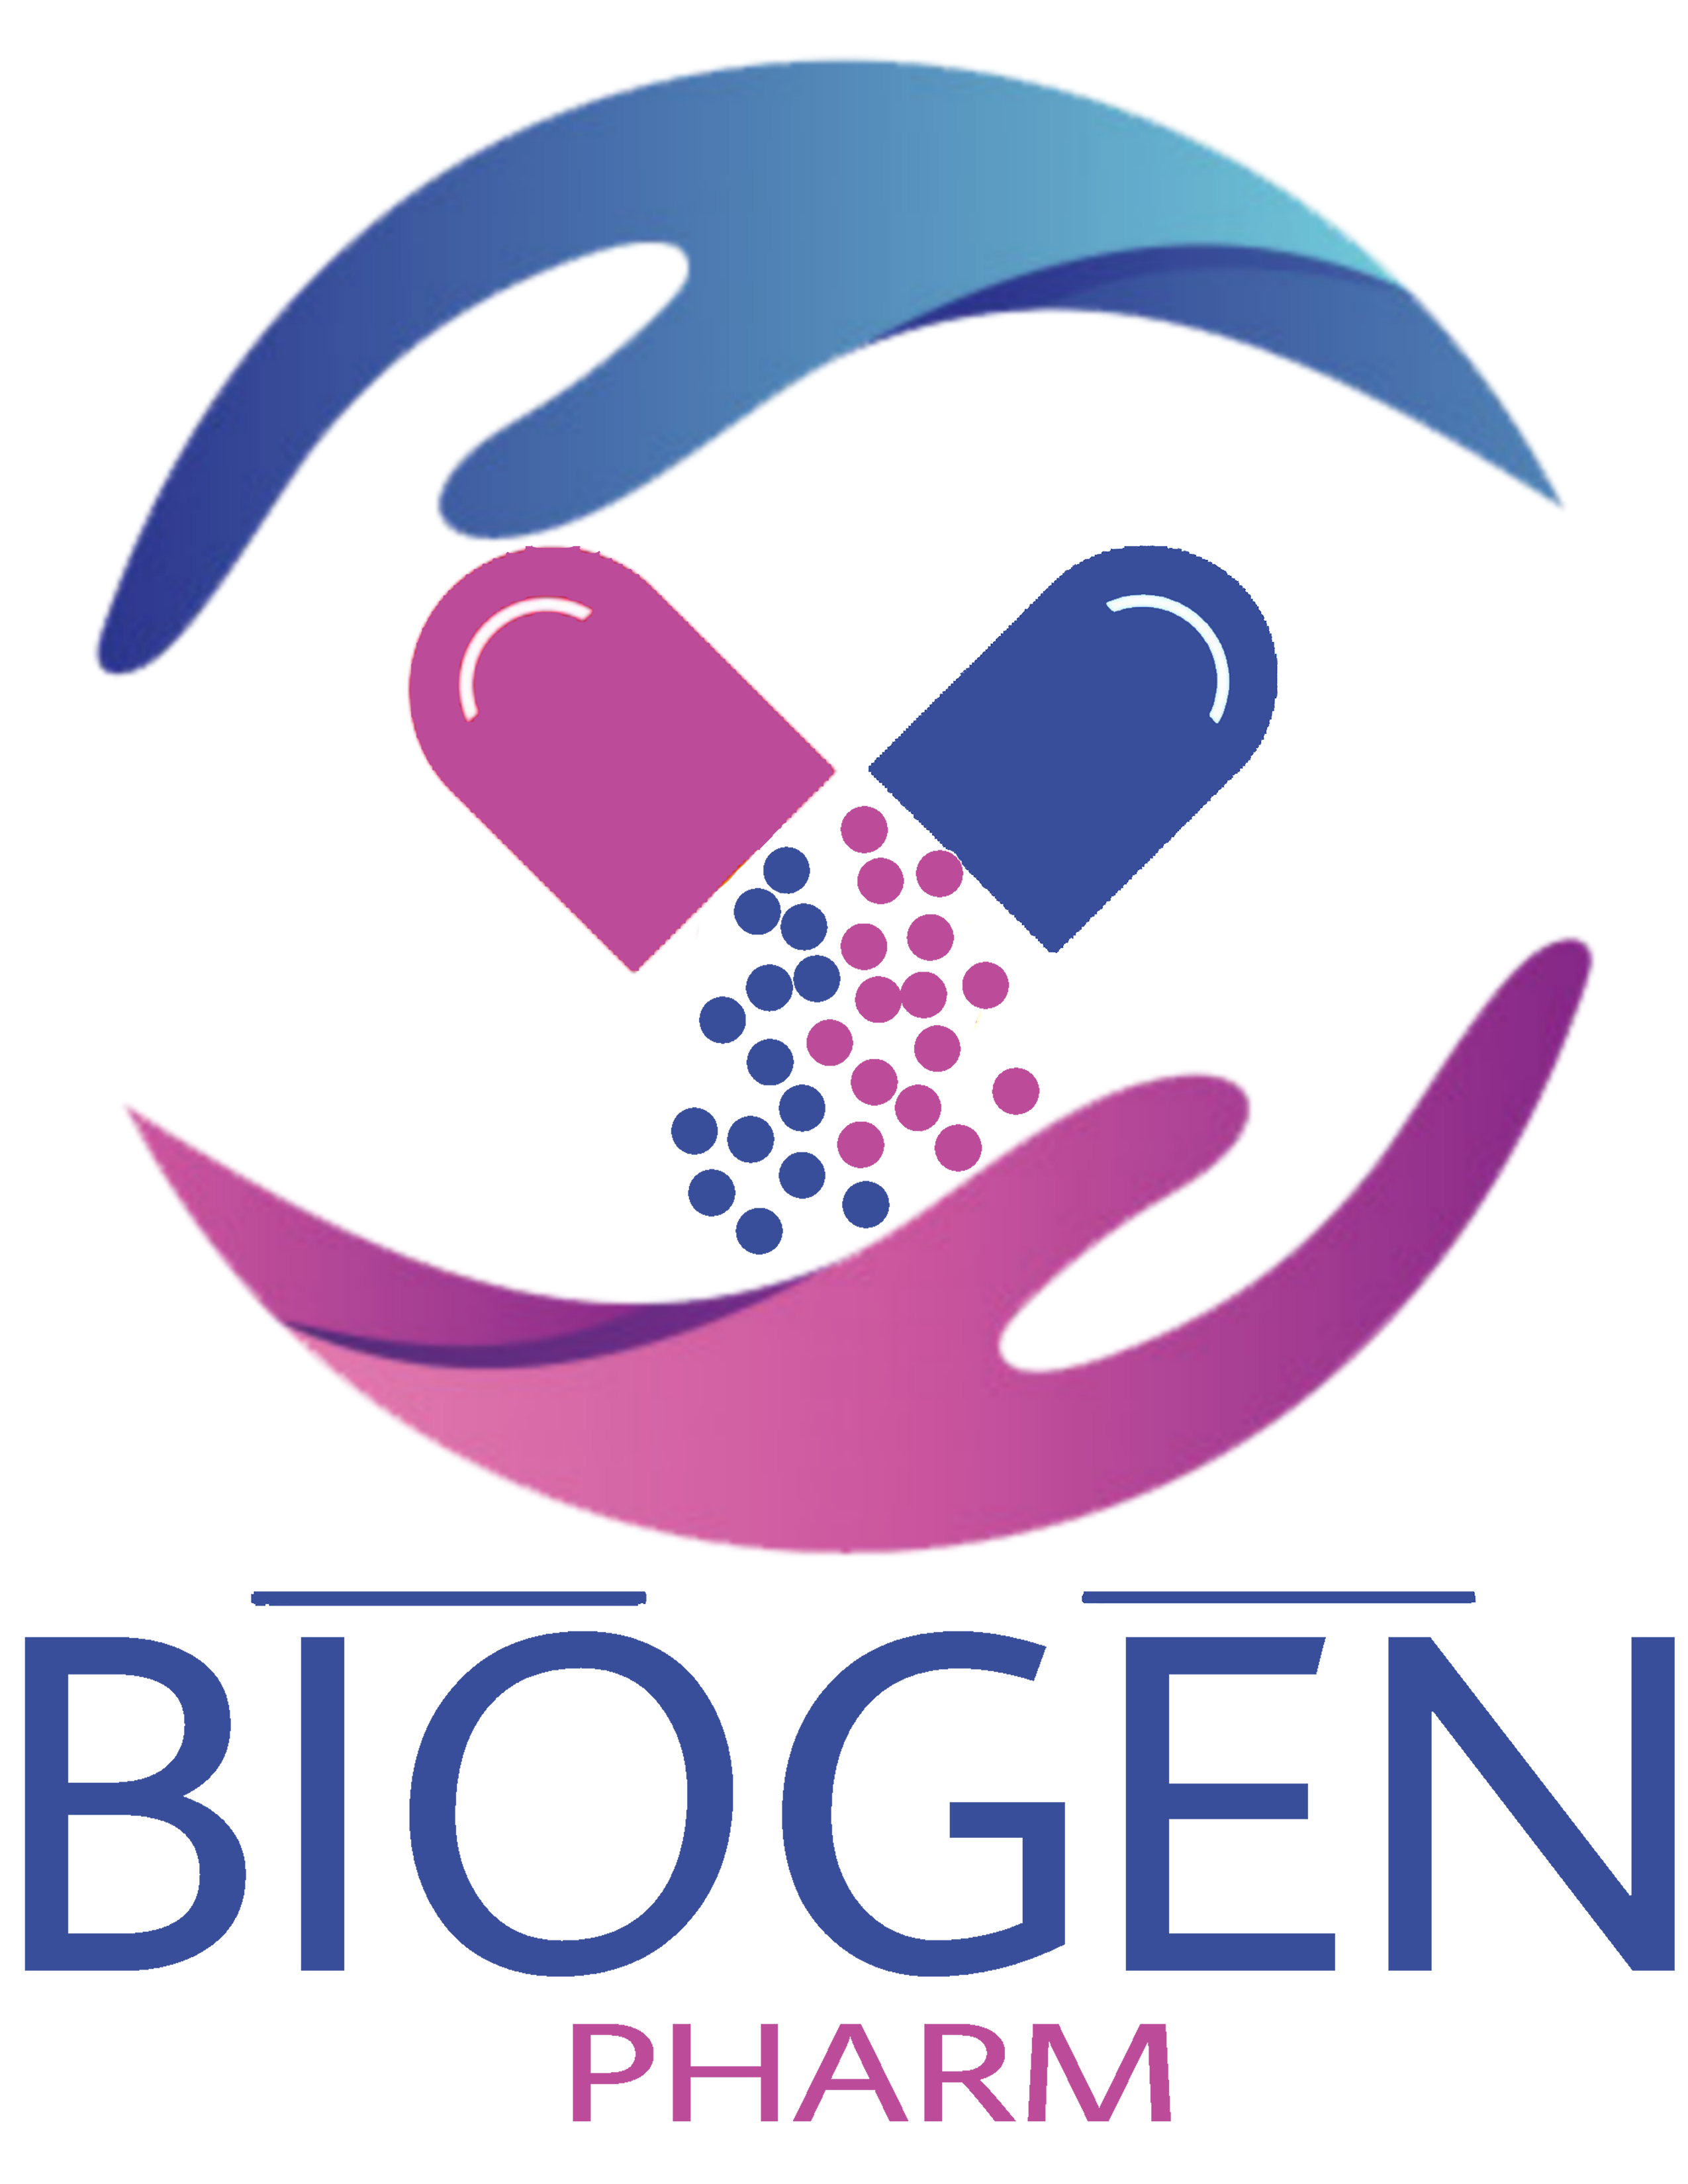 BioGen